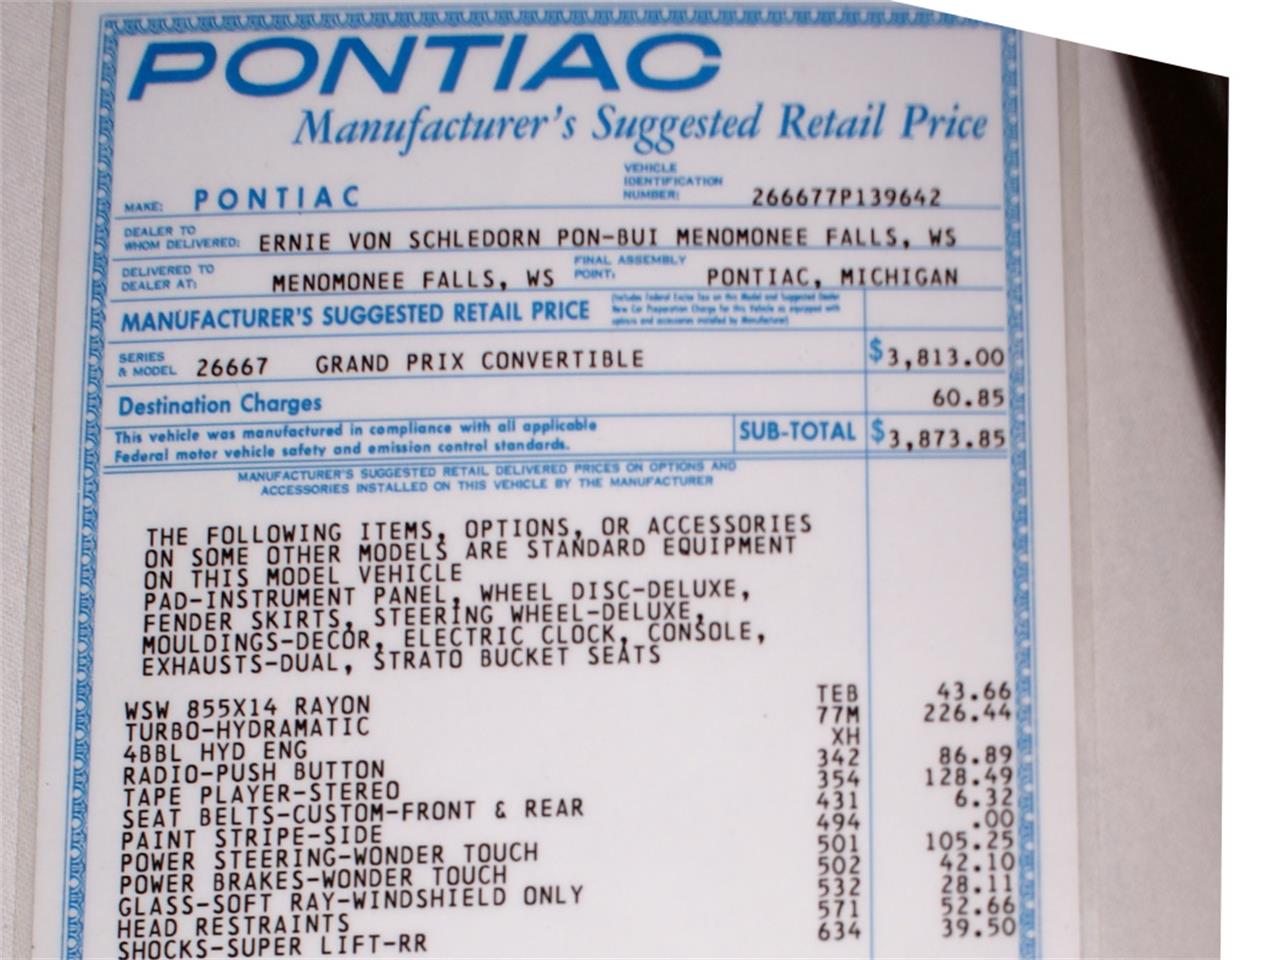 1967 pontiac grand prix convertible, Pick of the Day: 1967 Pontiac Grand Prix convertible, ClassicCars.com Journal